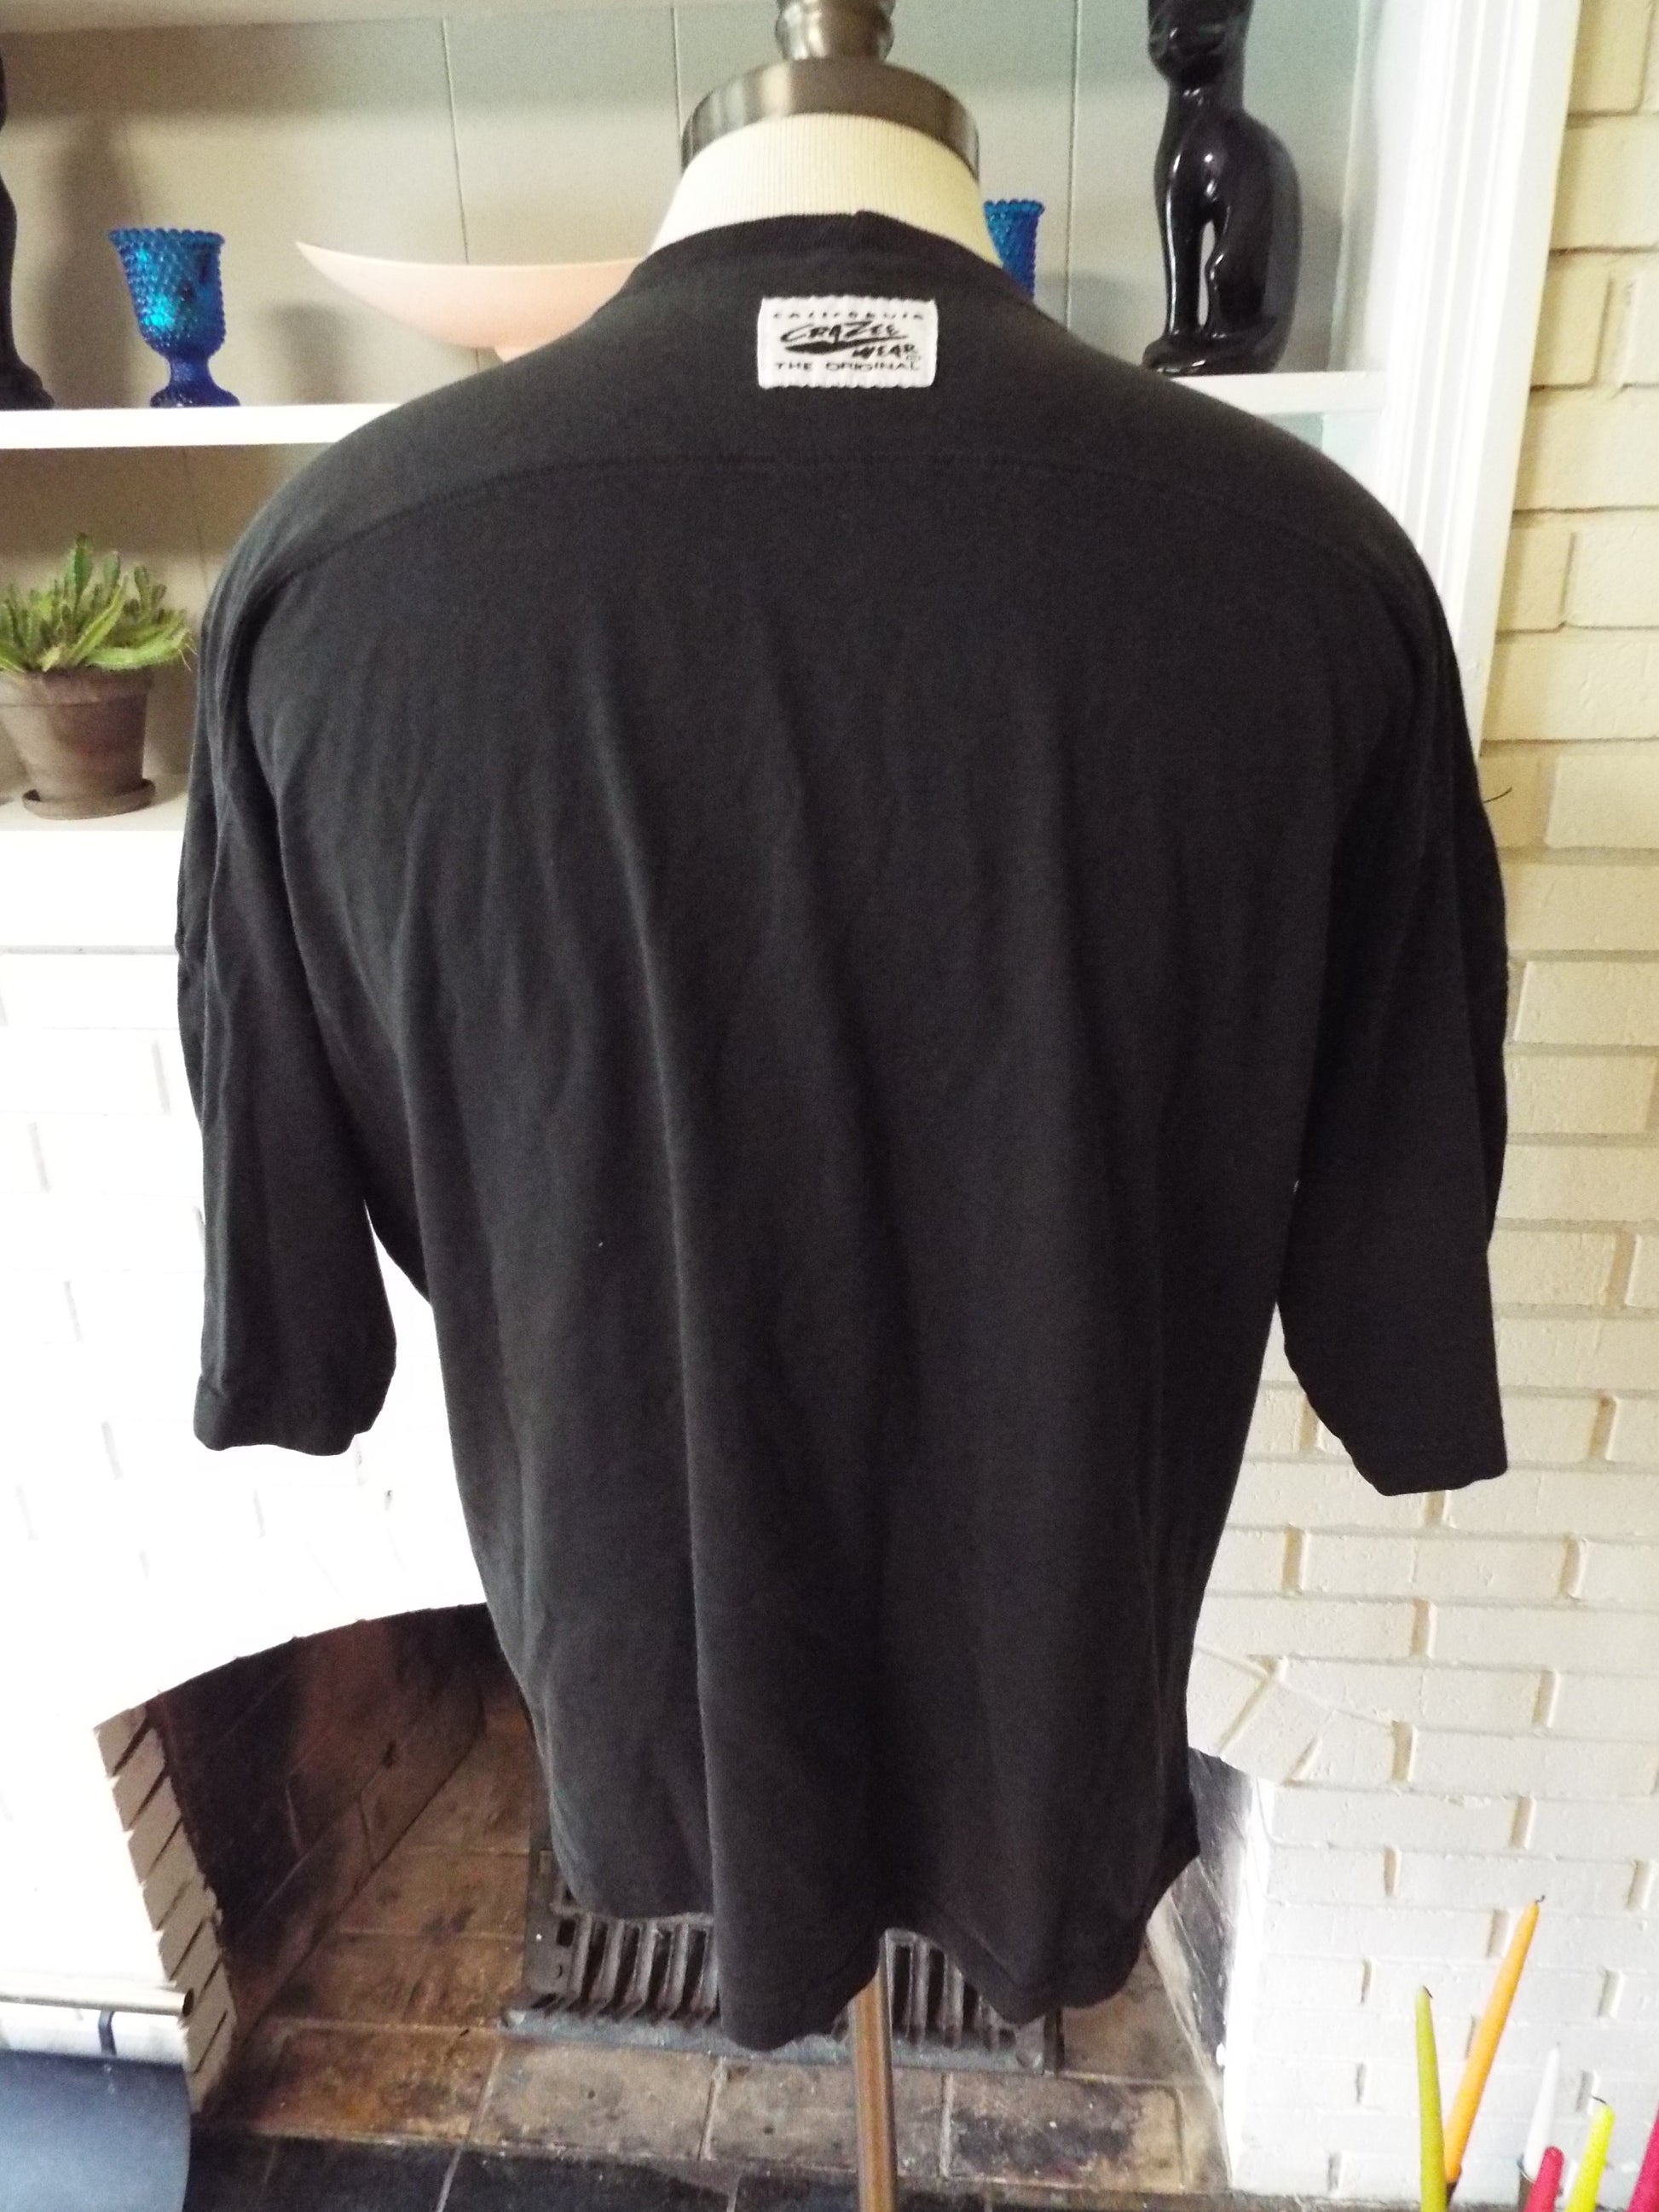 Vintage Black California Crazee Wear T Shirt – RetroGetgo